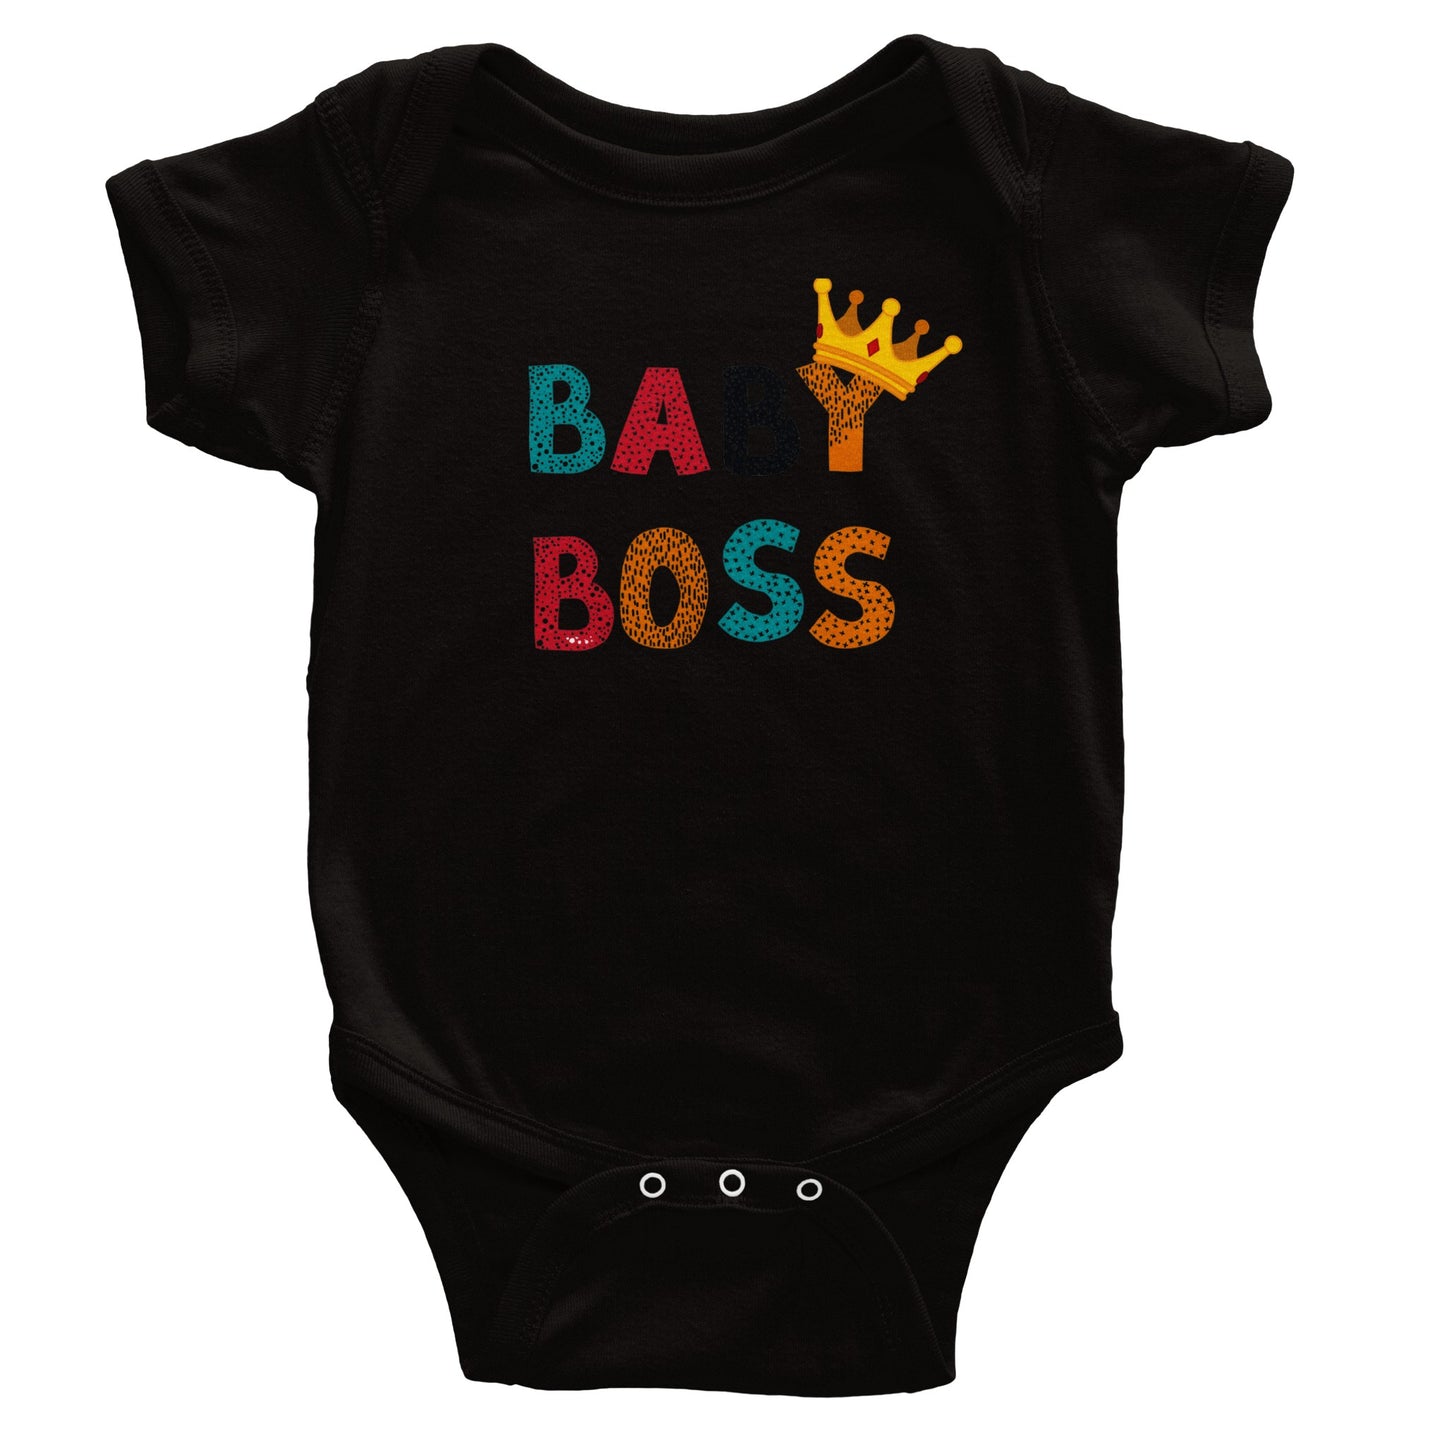 Baby boss body